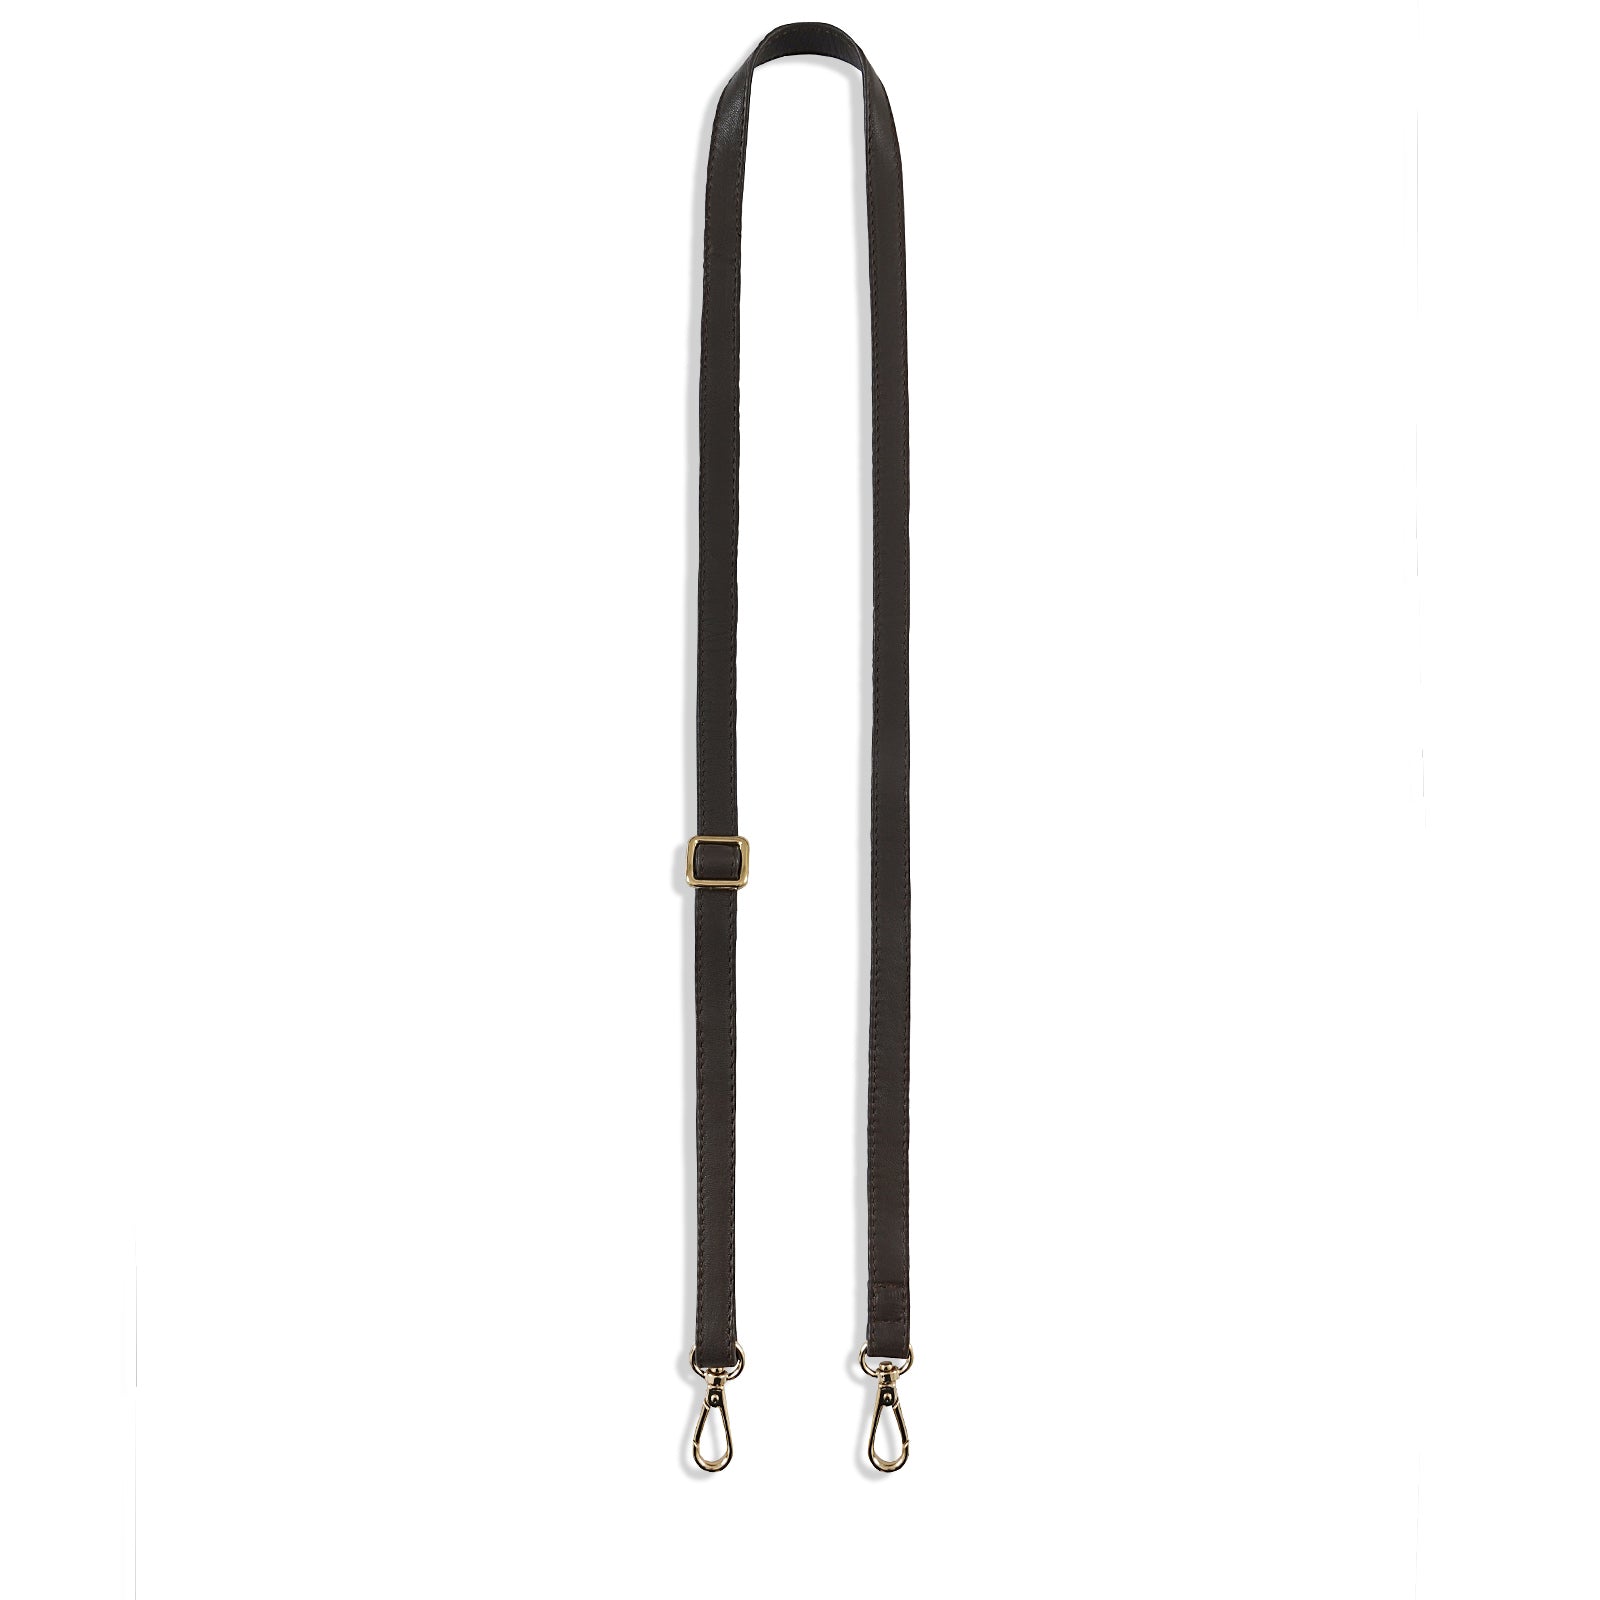 1.5cm Vachetta Leather Crossbody Strap for Medium Sized Louis